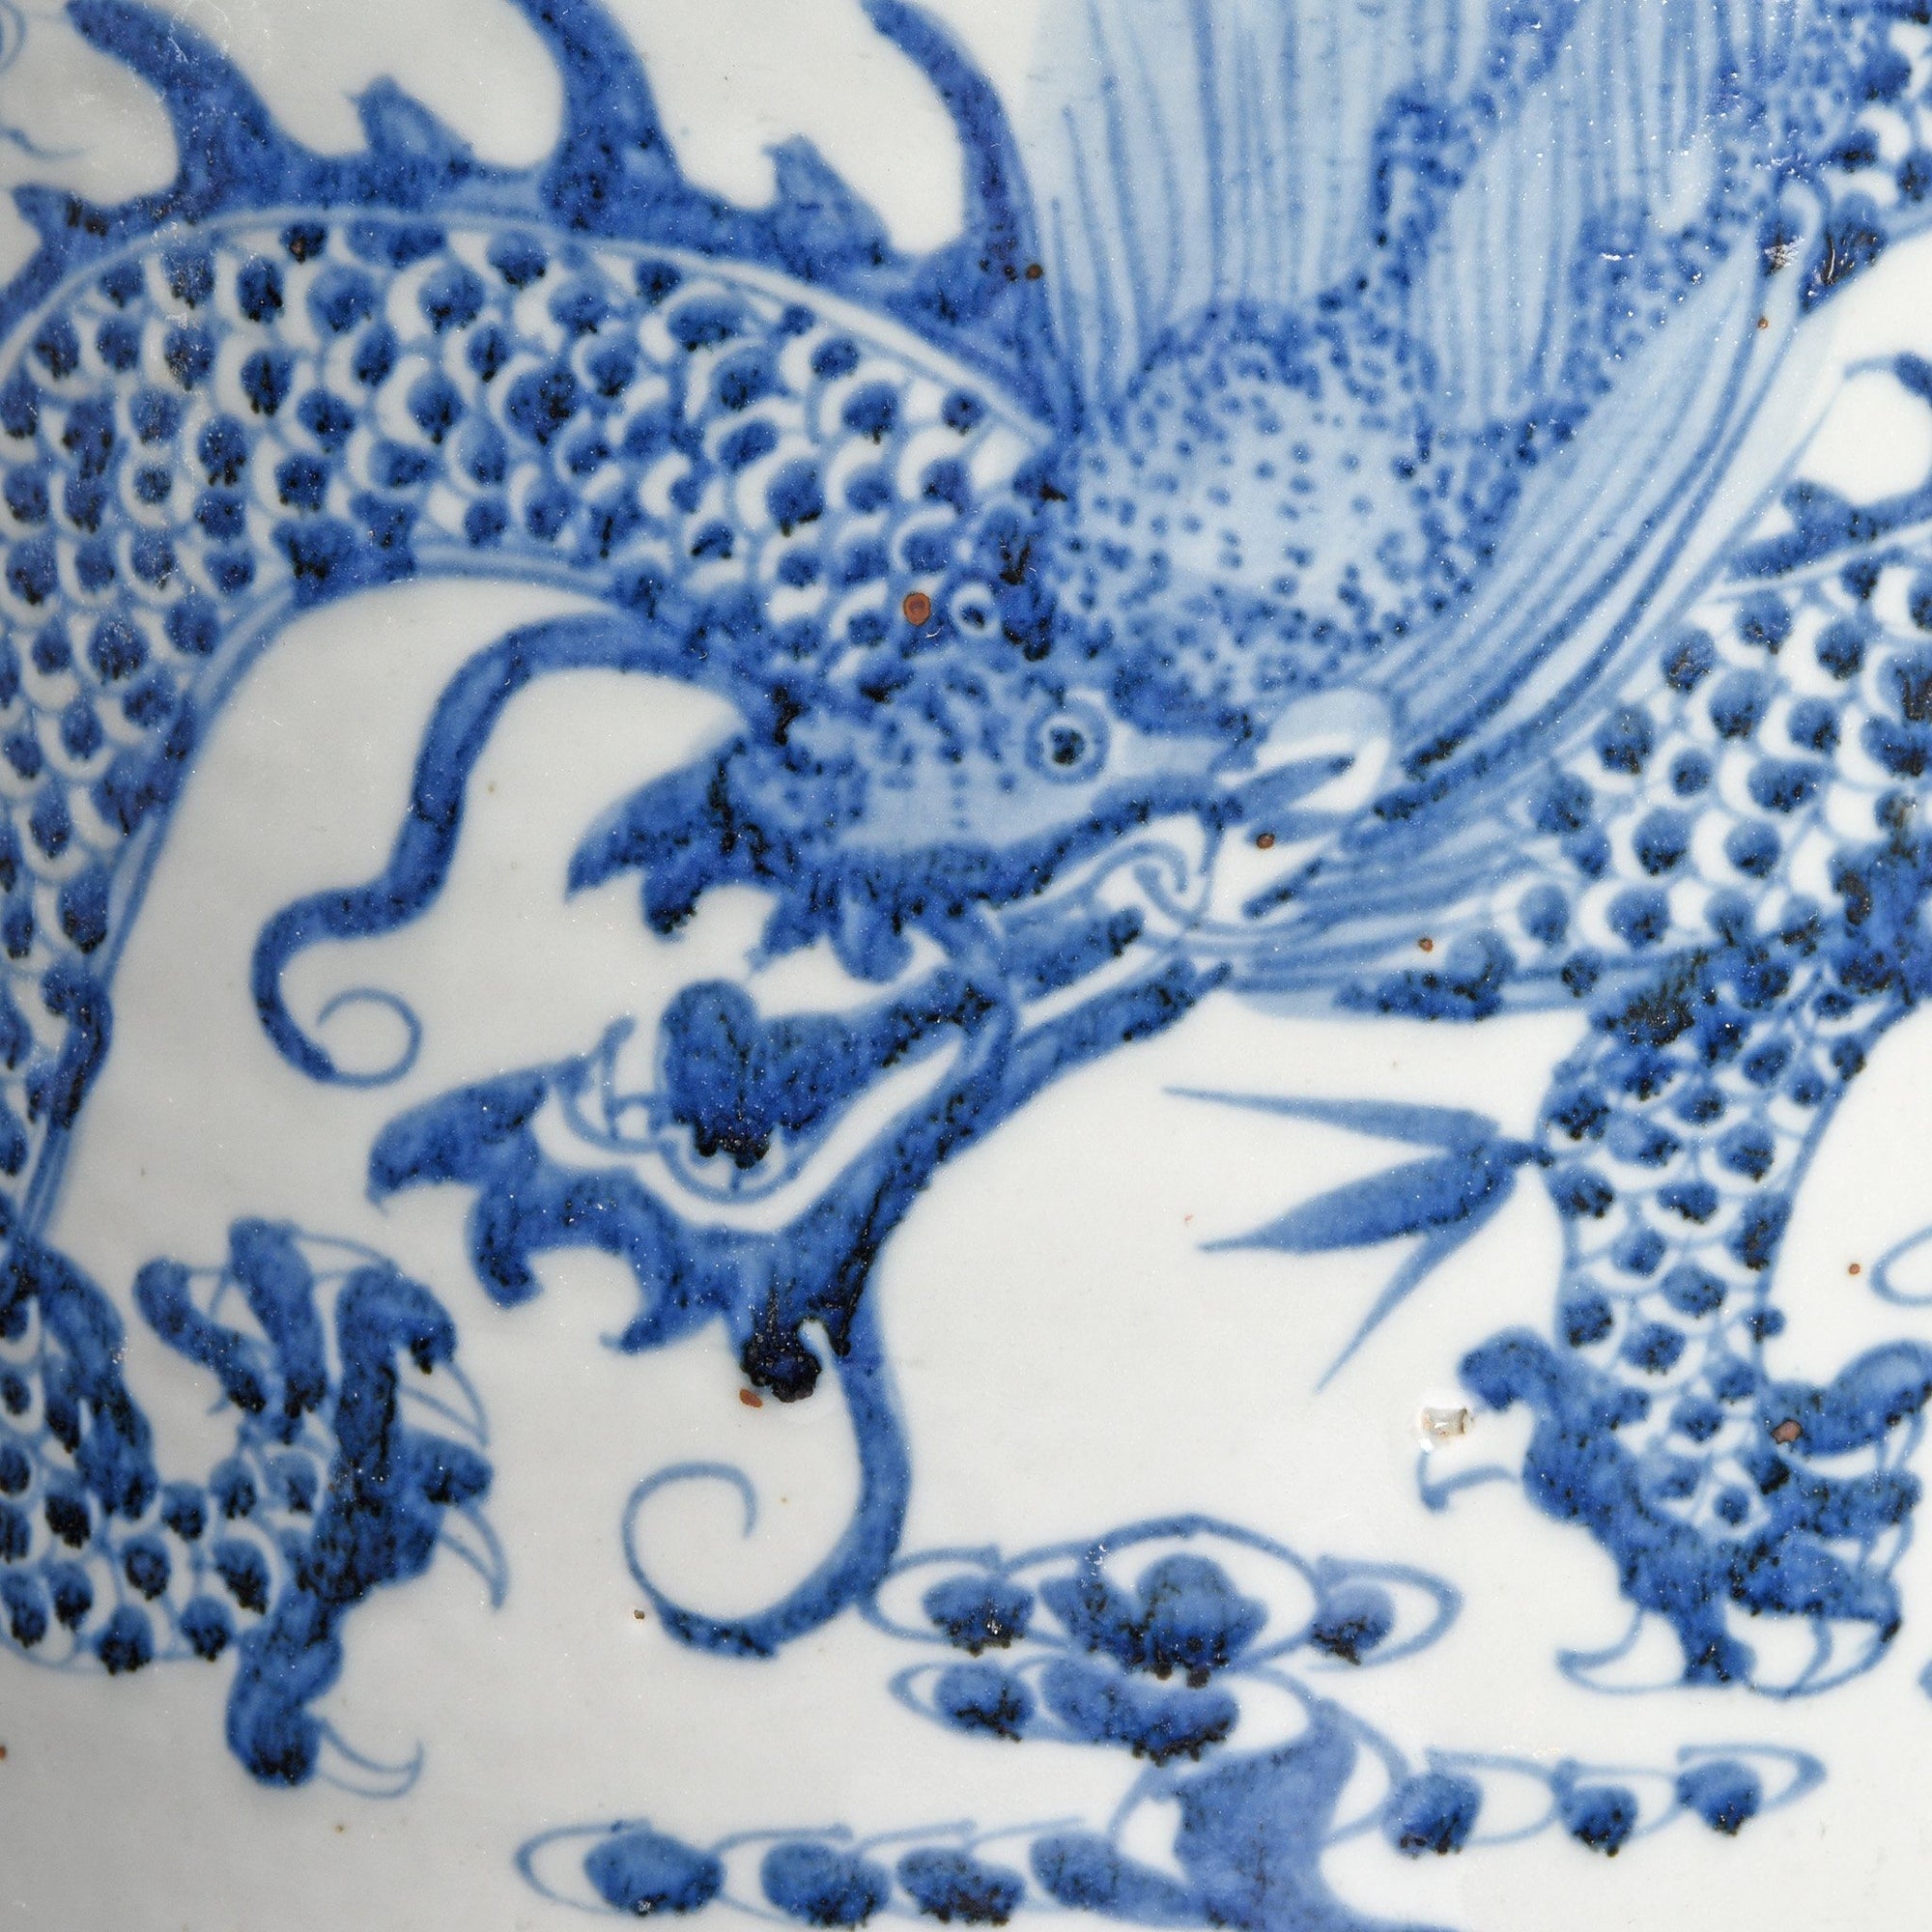 Porcelain Umbrella Stand - Blue & White Flying Dragon Design - 27 x 27 x 62.5 (w x d x h cms) - C0434V1